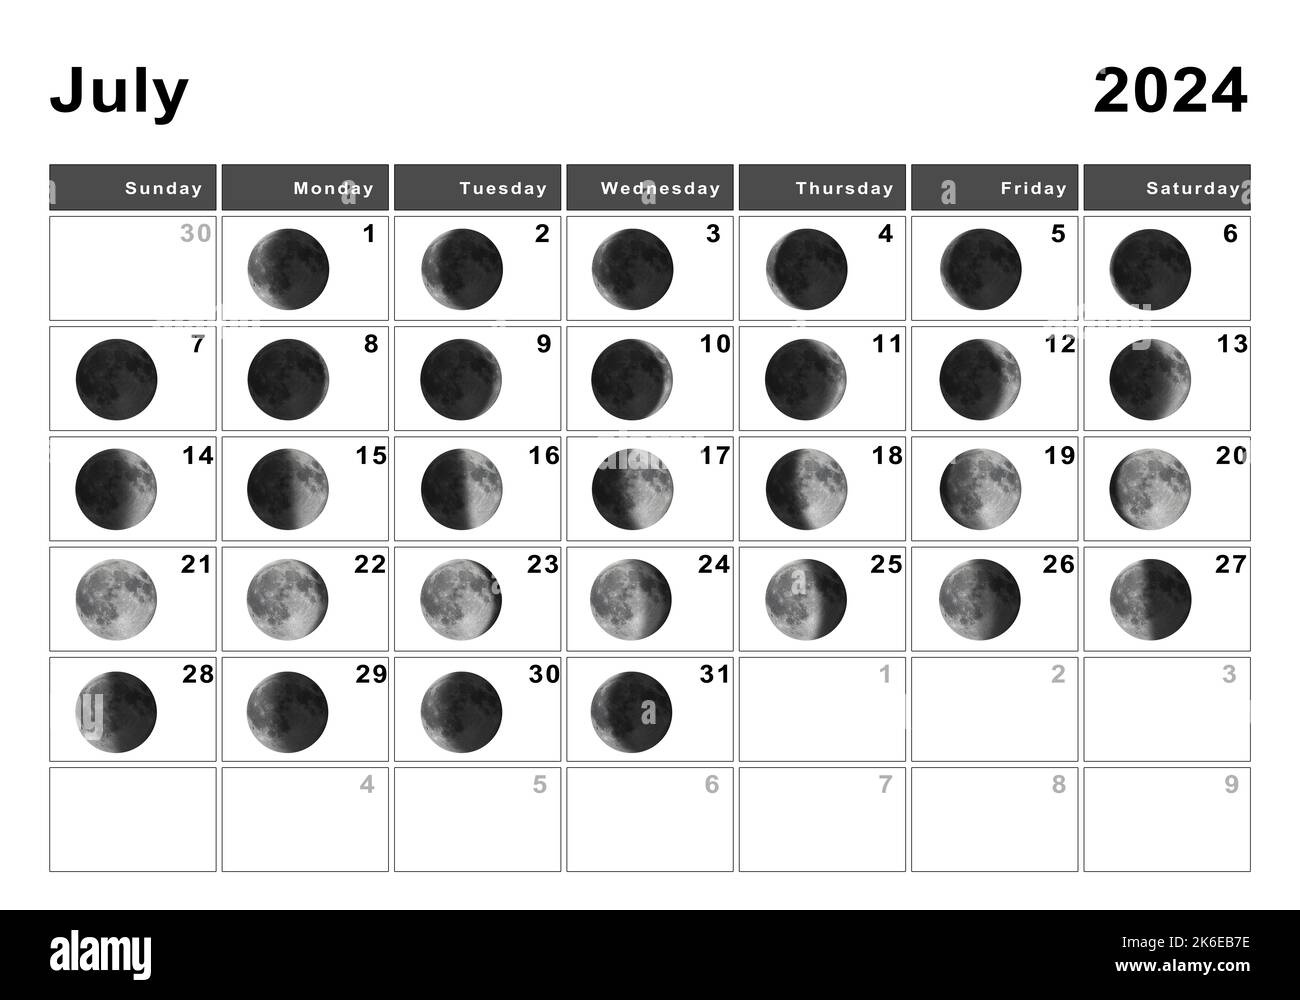 July 2024 Lunar Calendar, Moon Cycles, Moon Phases Stock Photo - Alamy for July 10th Lunar Calendar 2024